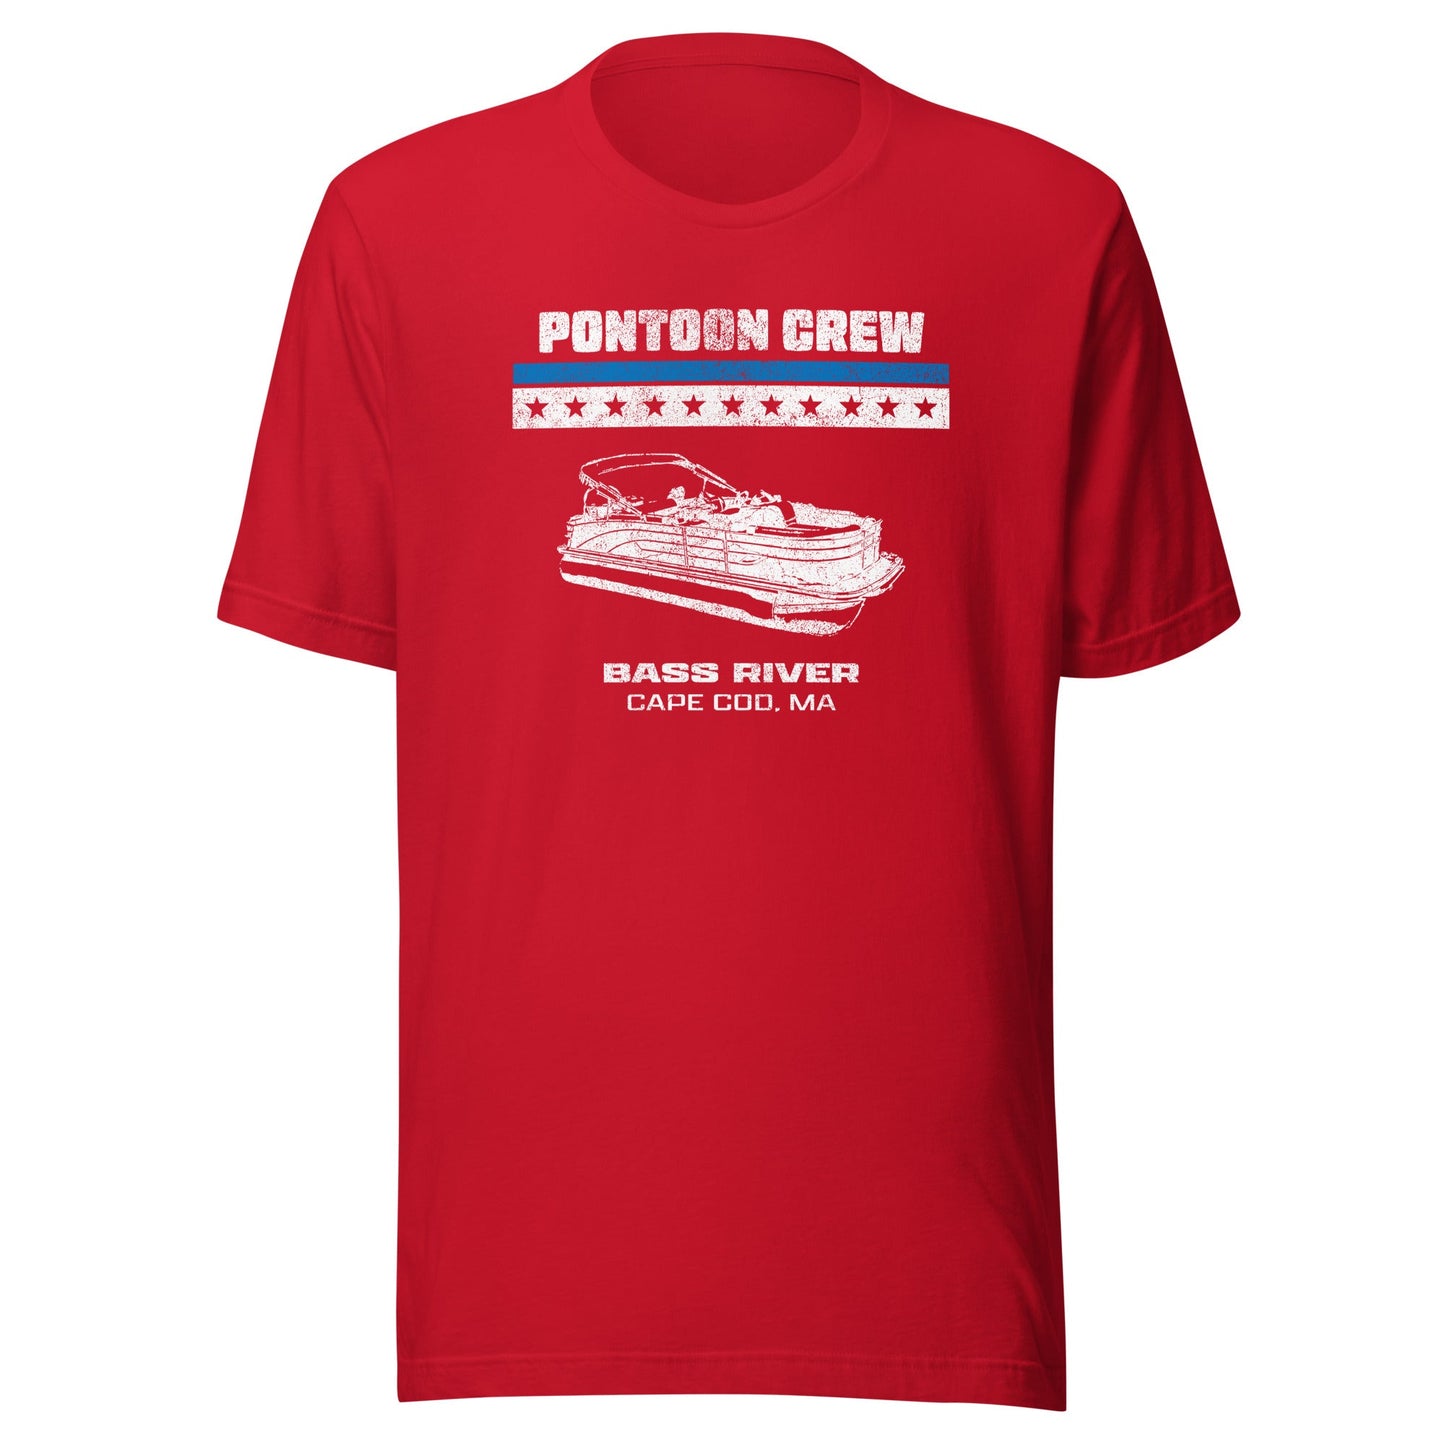 Bass River Pontoon T Shirt - Cape Cod, MA | Mens & Womens Patriotic Tee